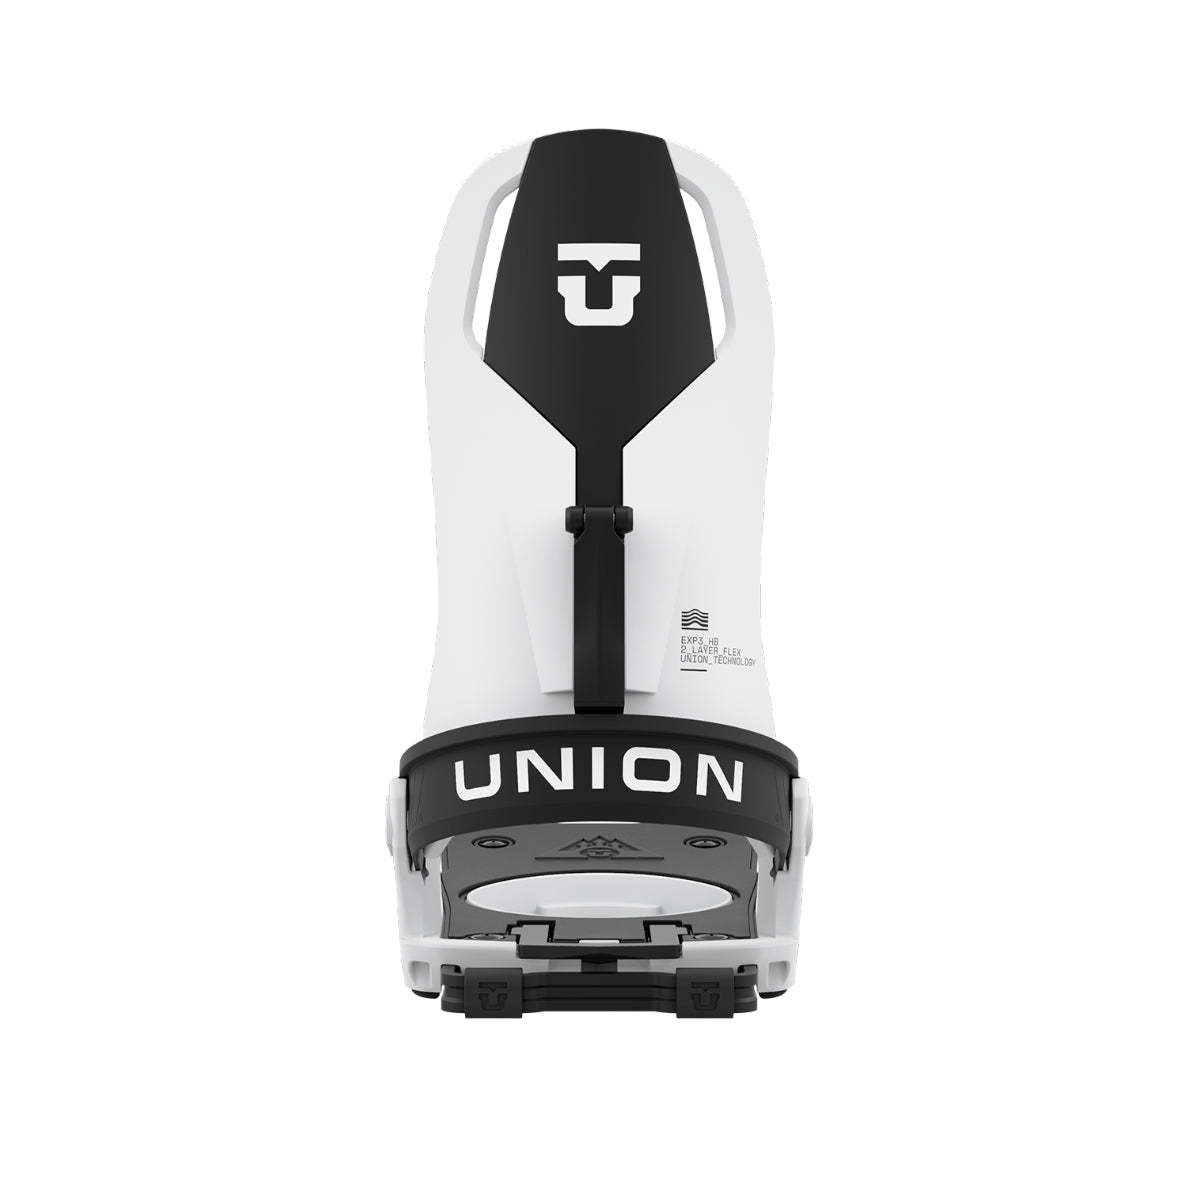 Union Binding - Unisex Charger - White